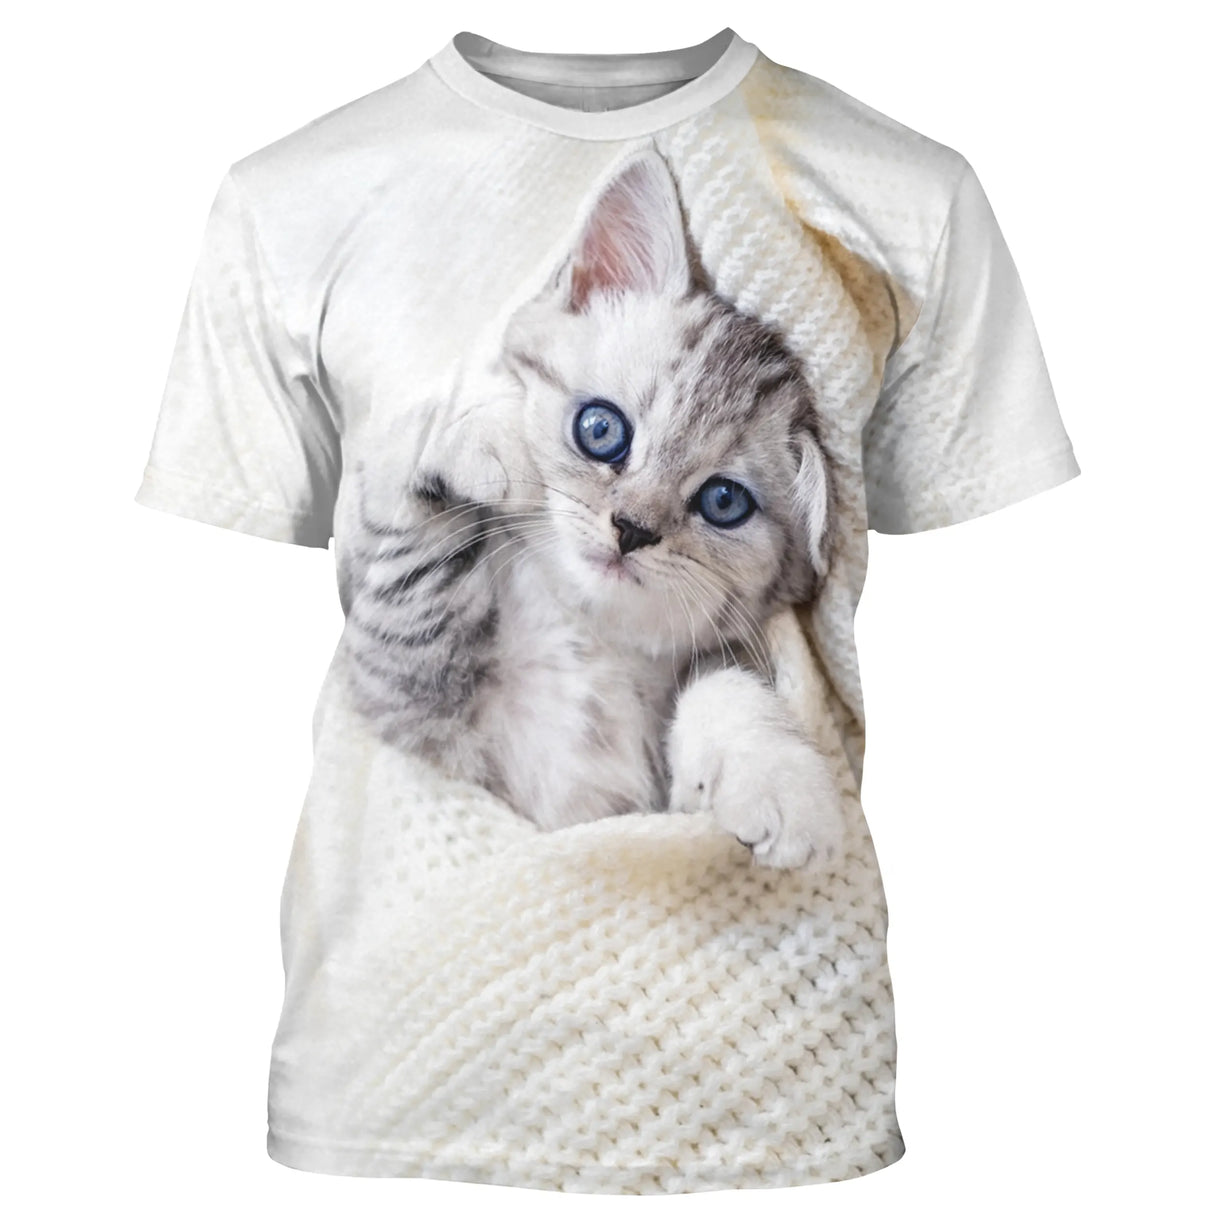 Men's Women's Daily Outdoors Basic White T-shirt 3D Cute Cat Patterns - CT16012312